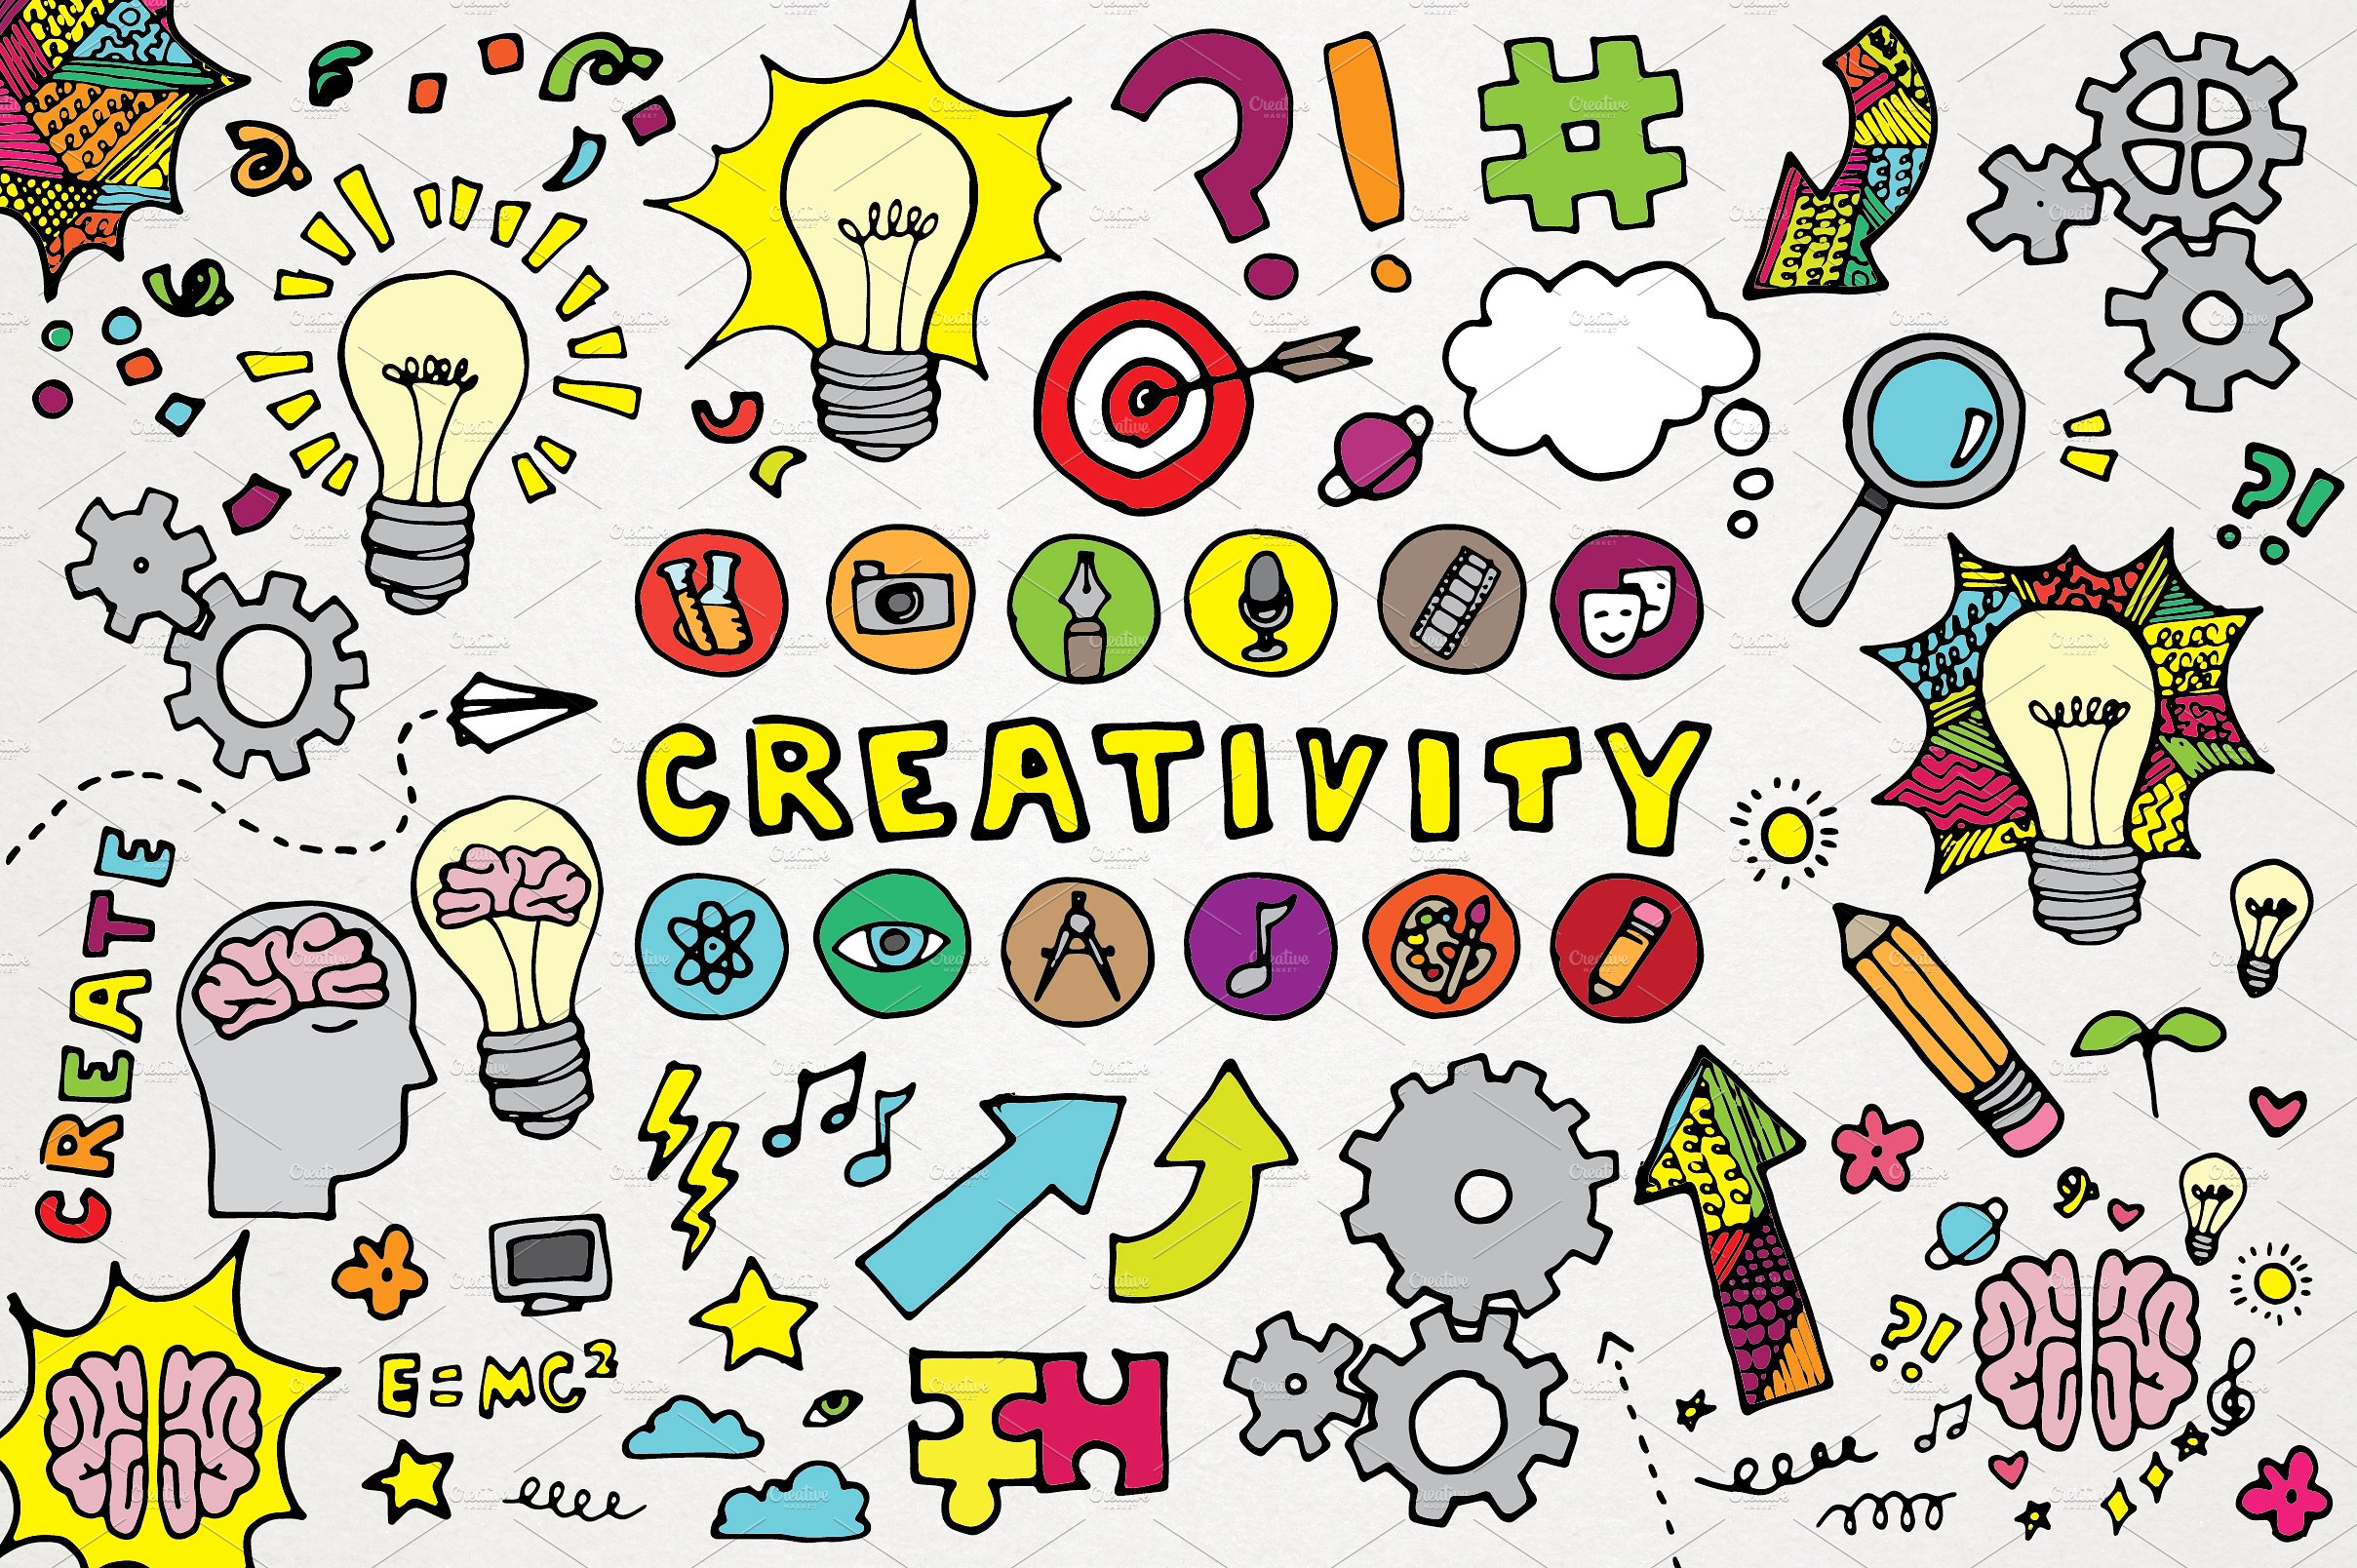 Creativity illustrations set market. Creative clipart